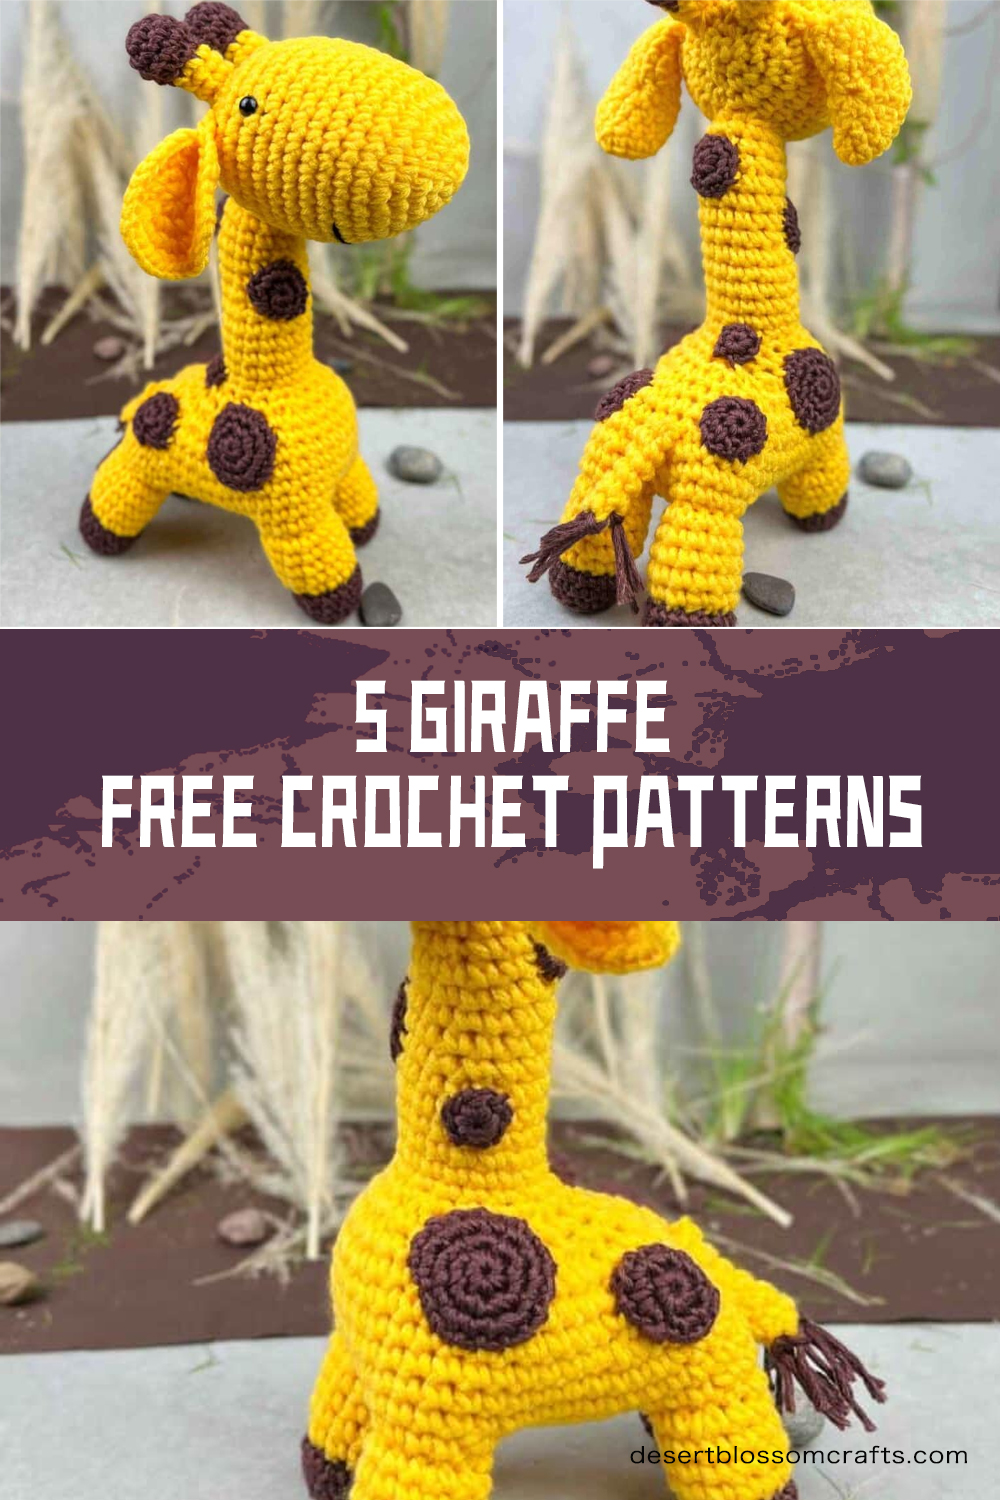 5 Giraffe FREE Crochet Patterns